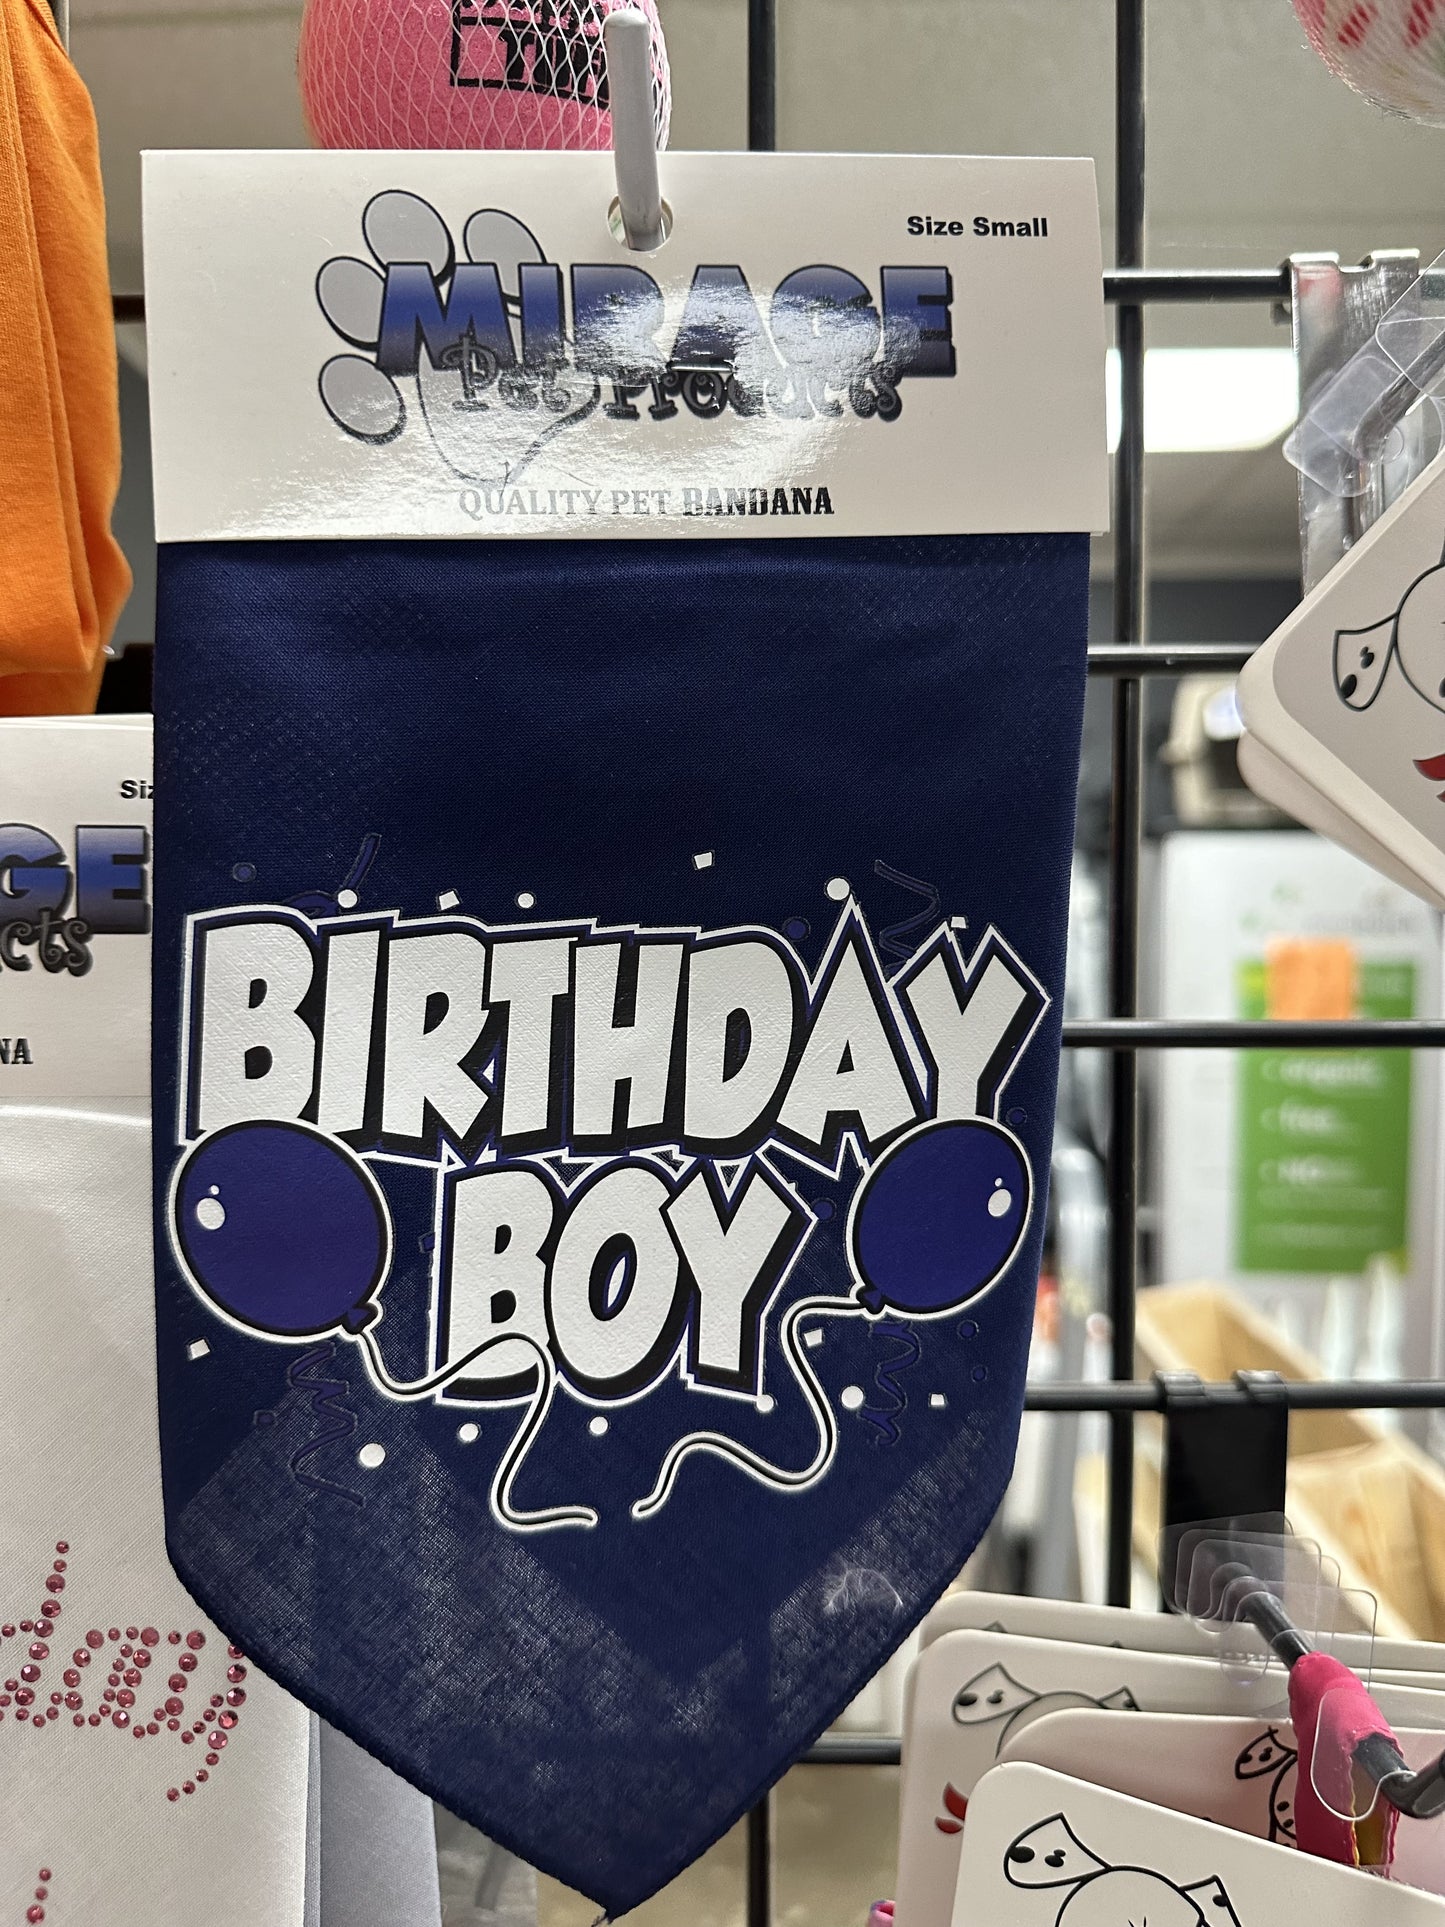 Mirage Birthday Boy Bandana,Small